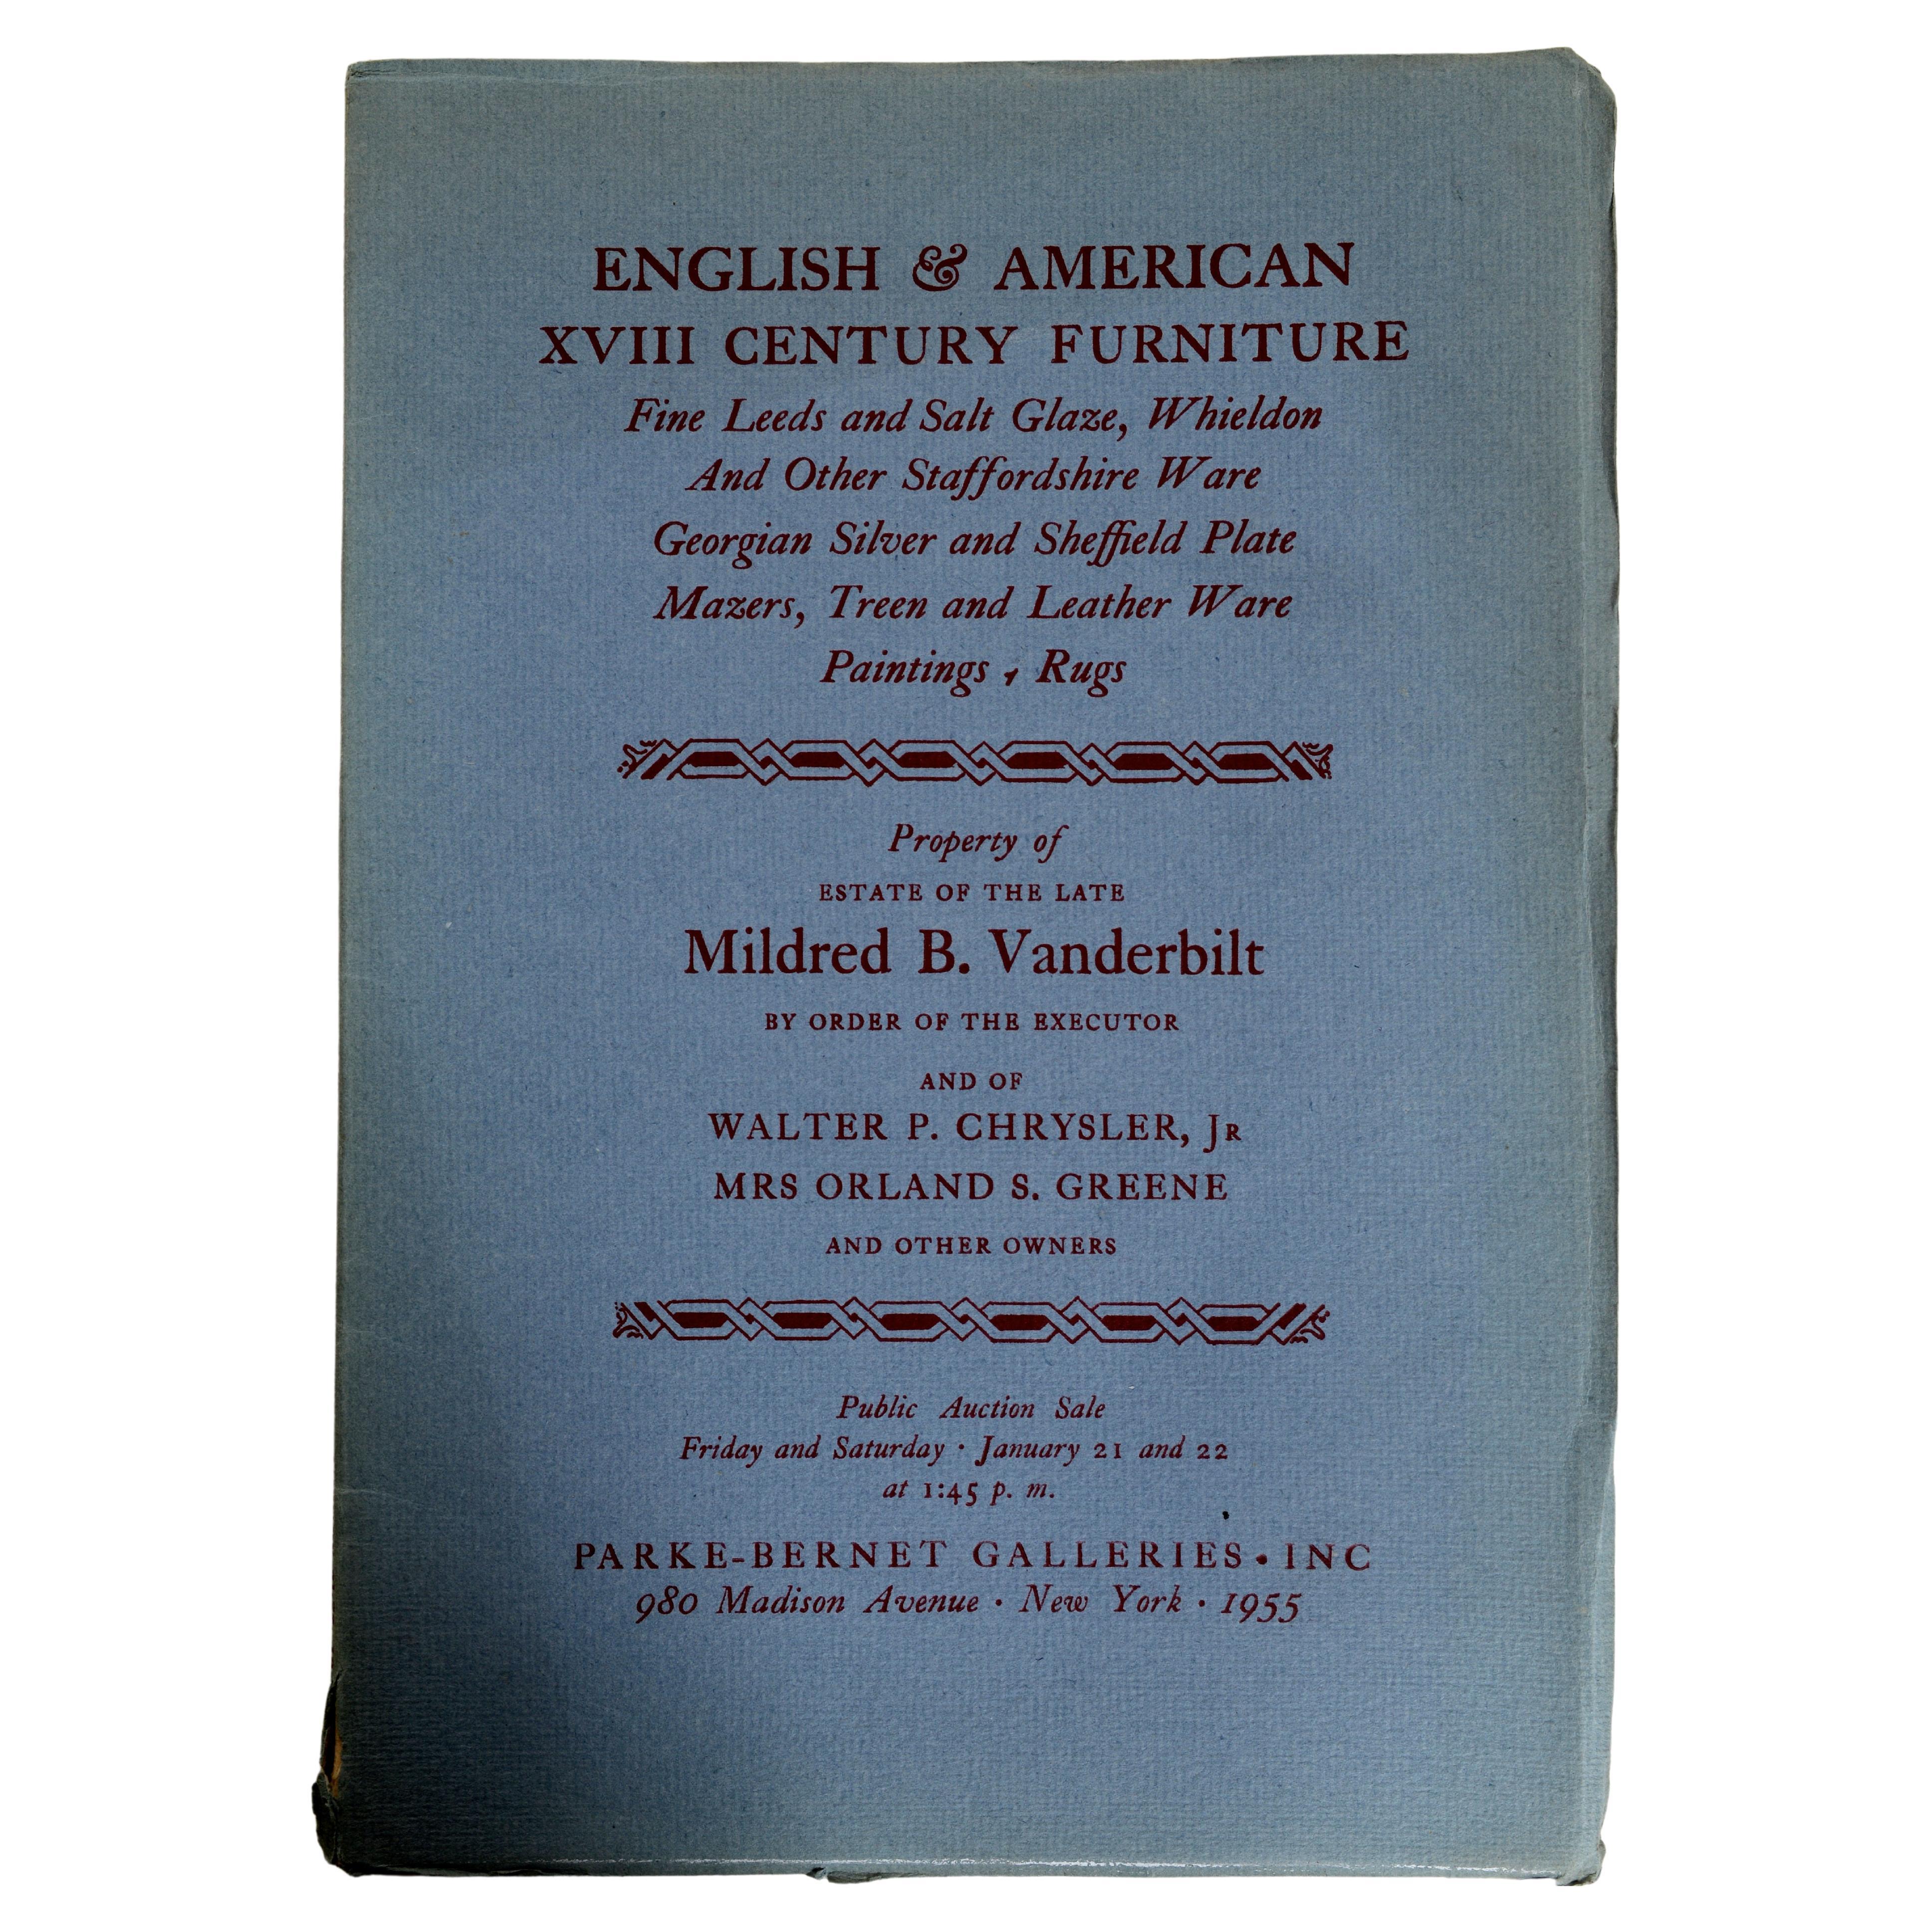 Parke-Bernet, Property of Mildred B. Vanderbilt English & American Furniture